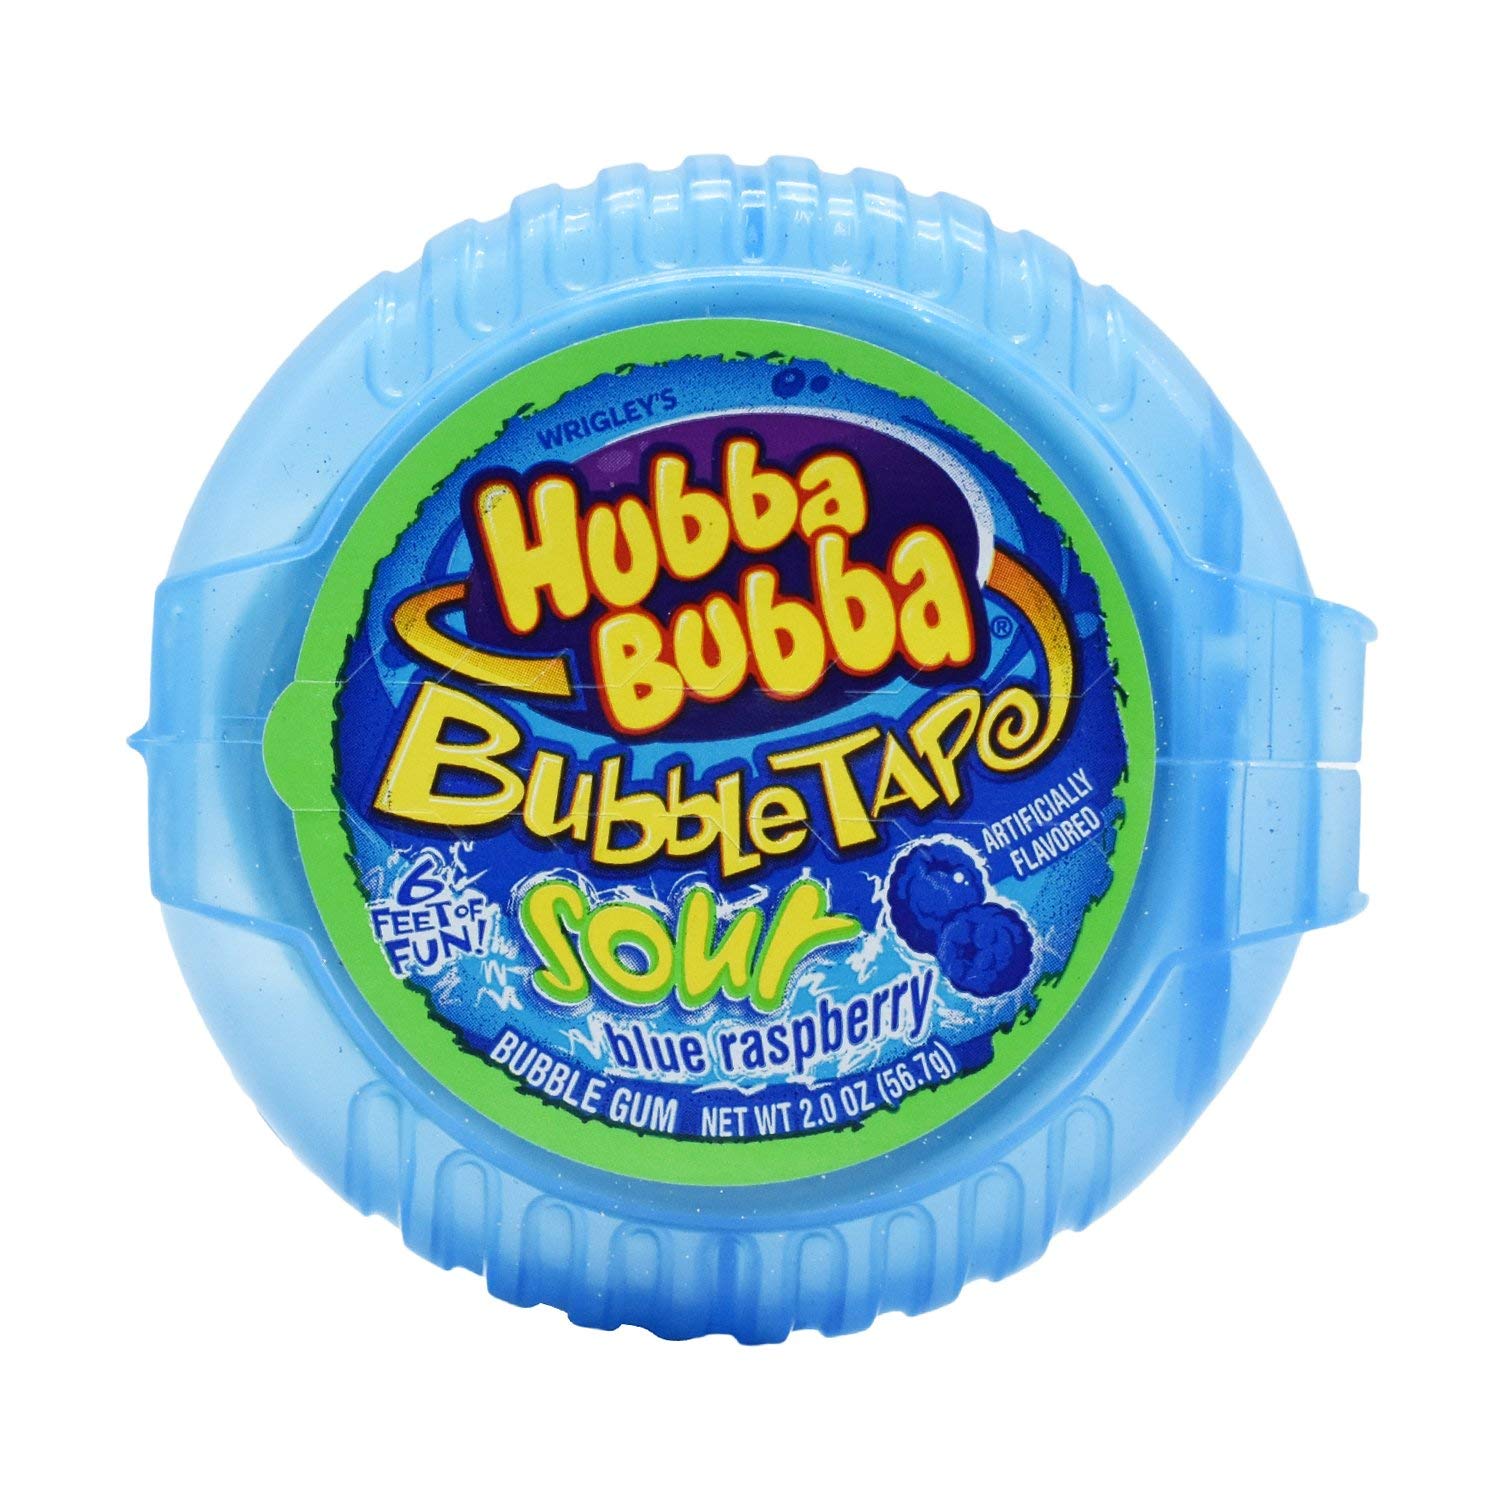 Hubba Bubba Sour Blue Raspberry Bubble Tape - 2.0 oz